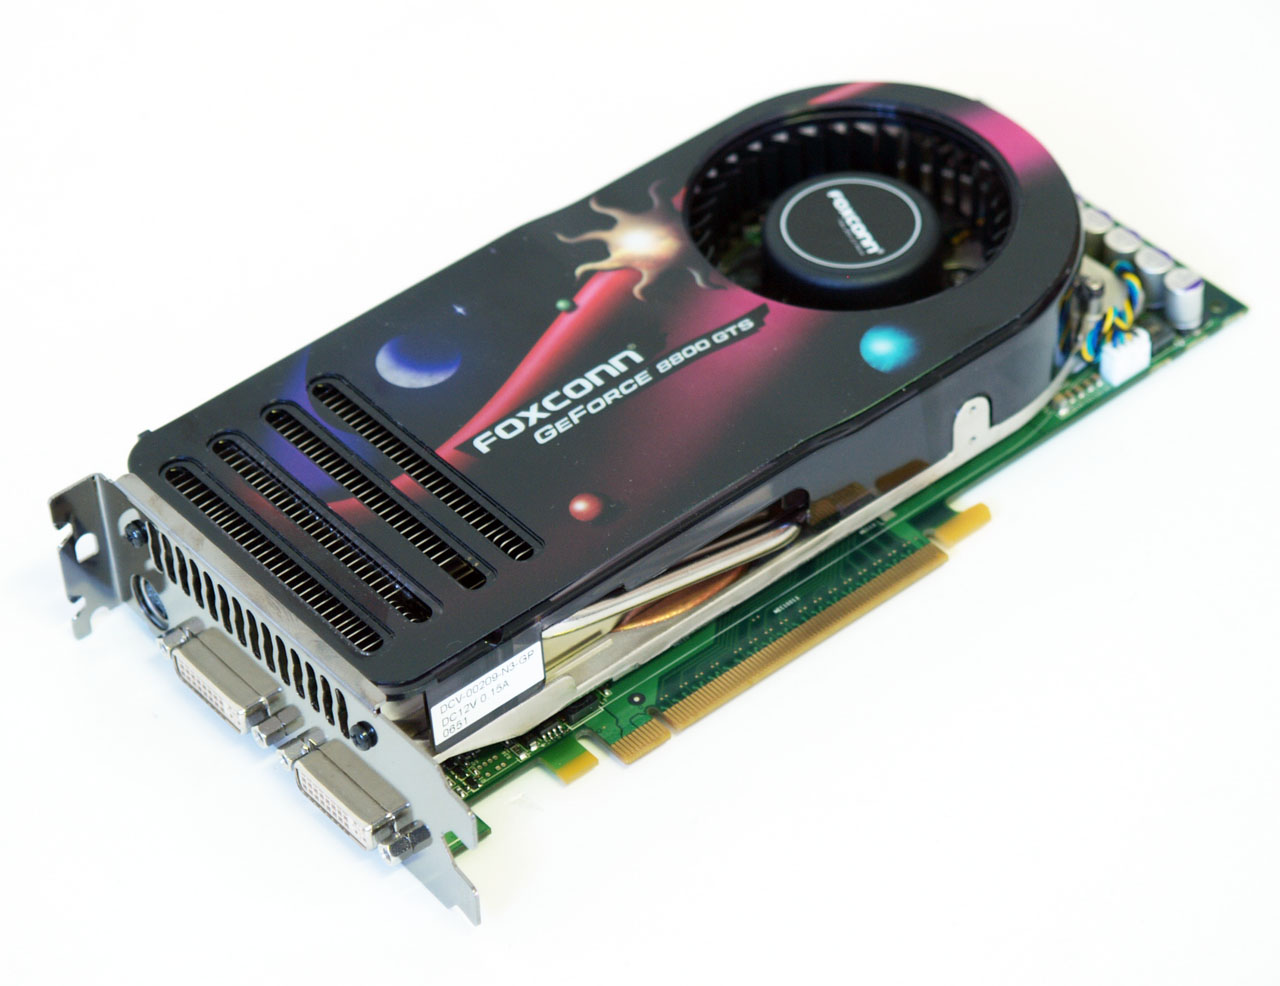 Foxconn GeForce 8800GTS - OC Edition